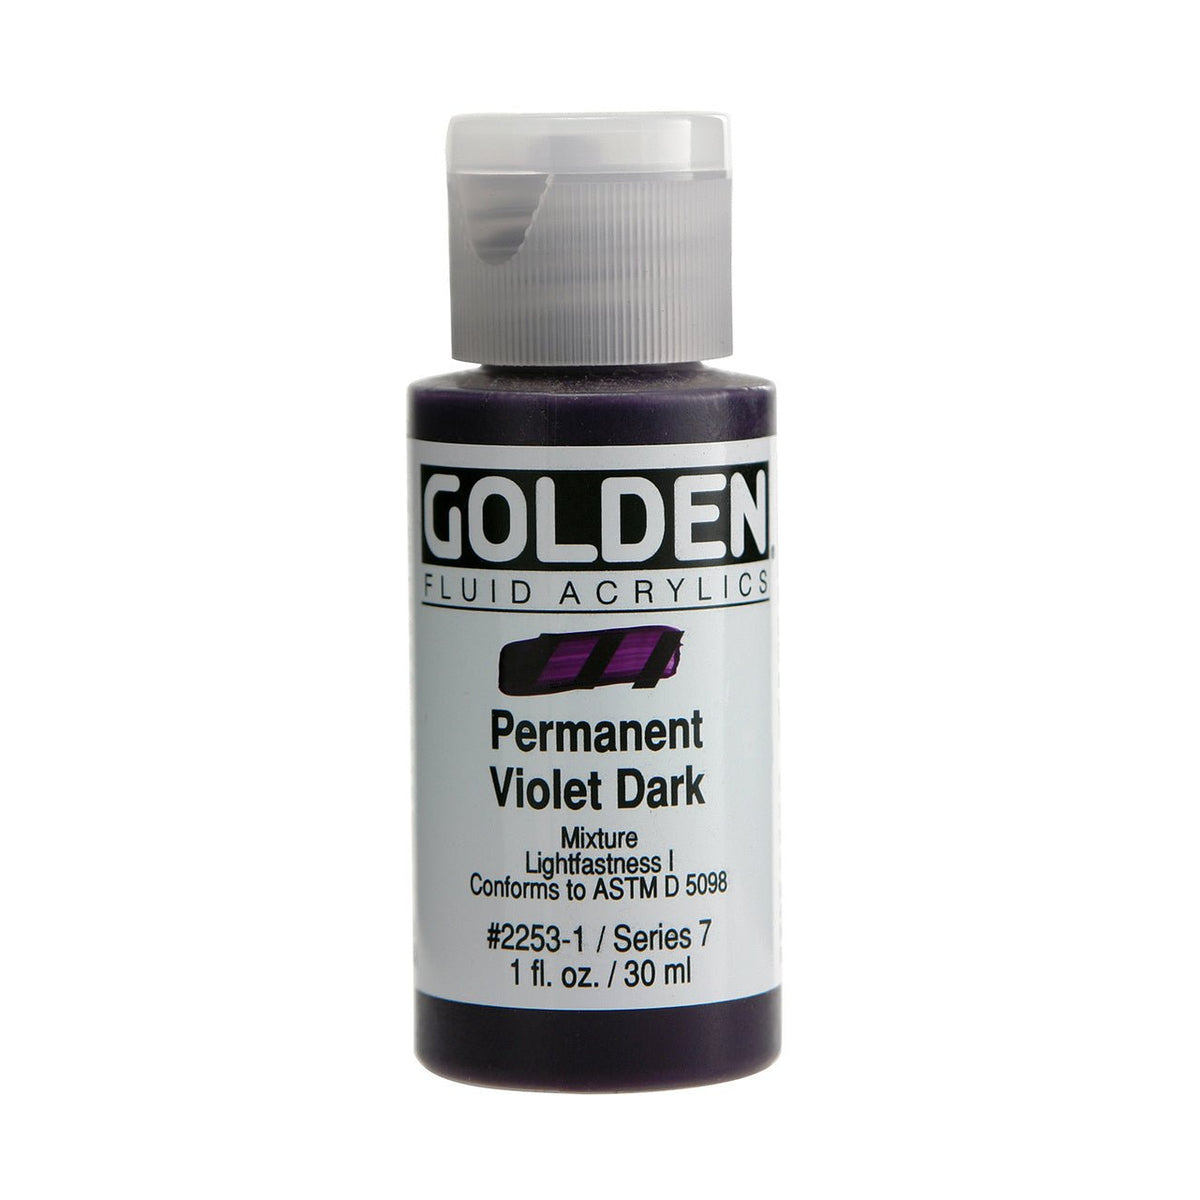 Golden Fluid Acrylic Permanent Violet Dark 1 oz - merriartist.com